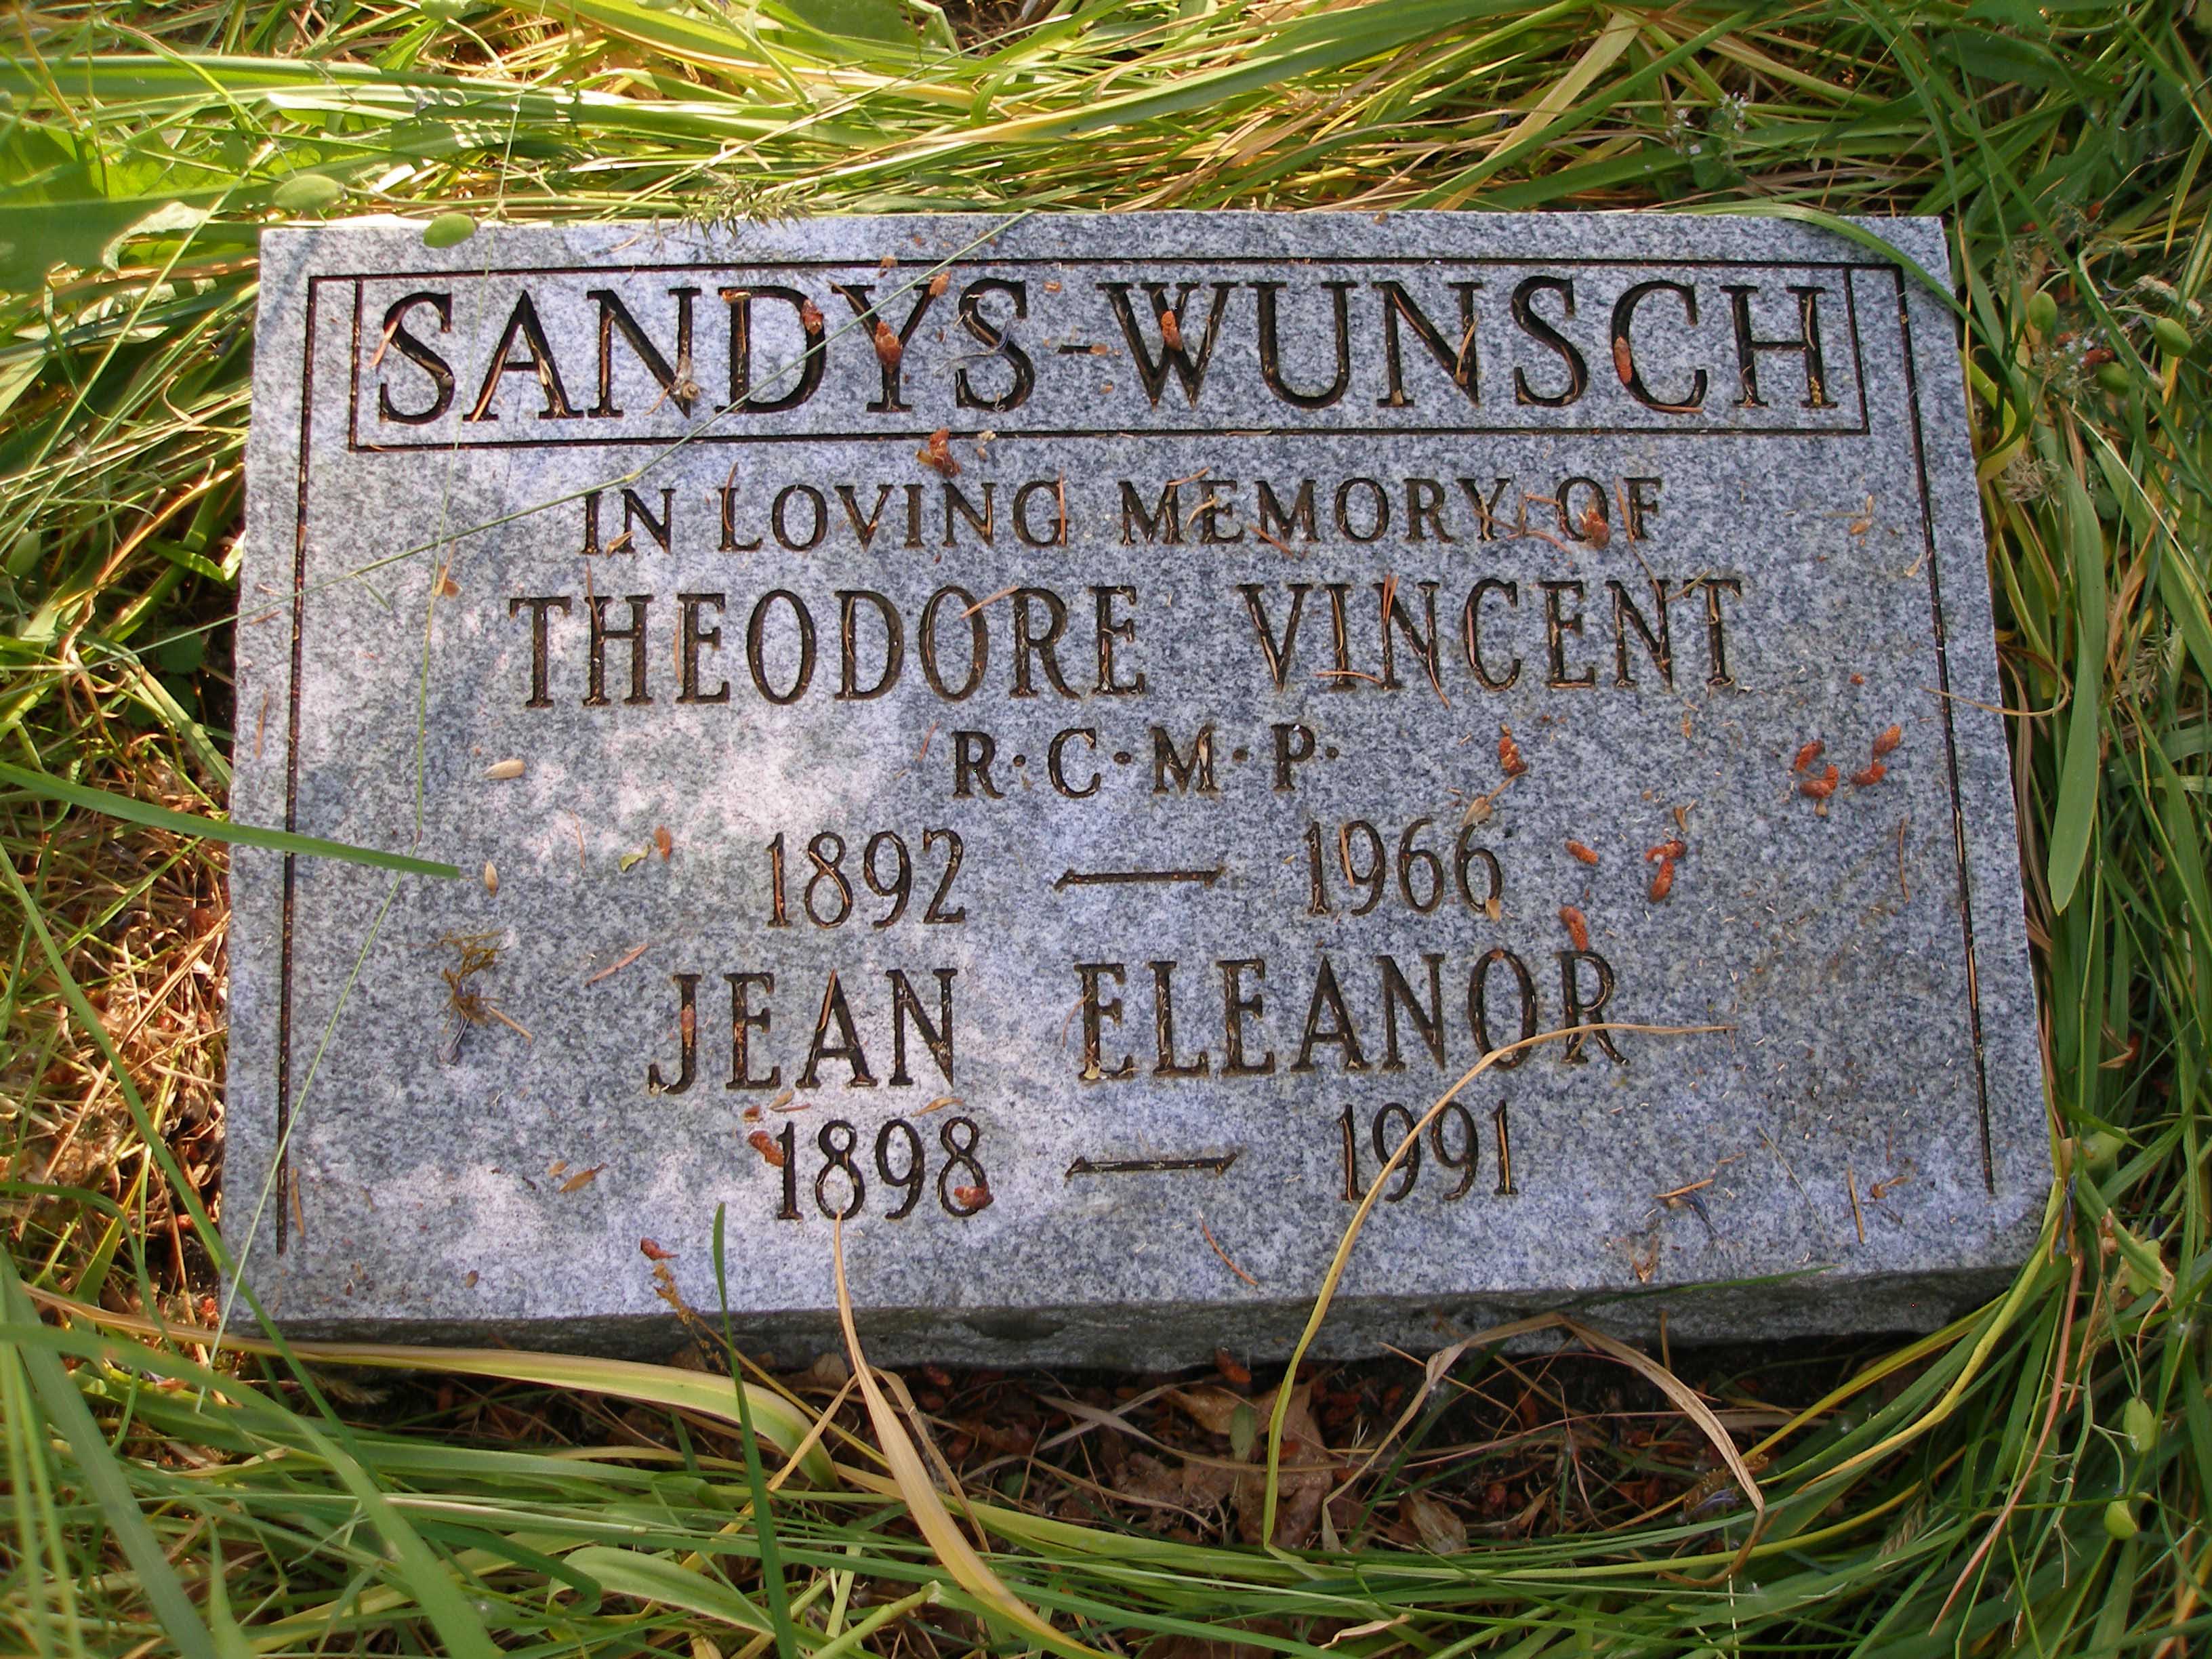 Theodore sandys-Wunsch grave